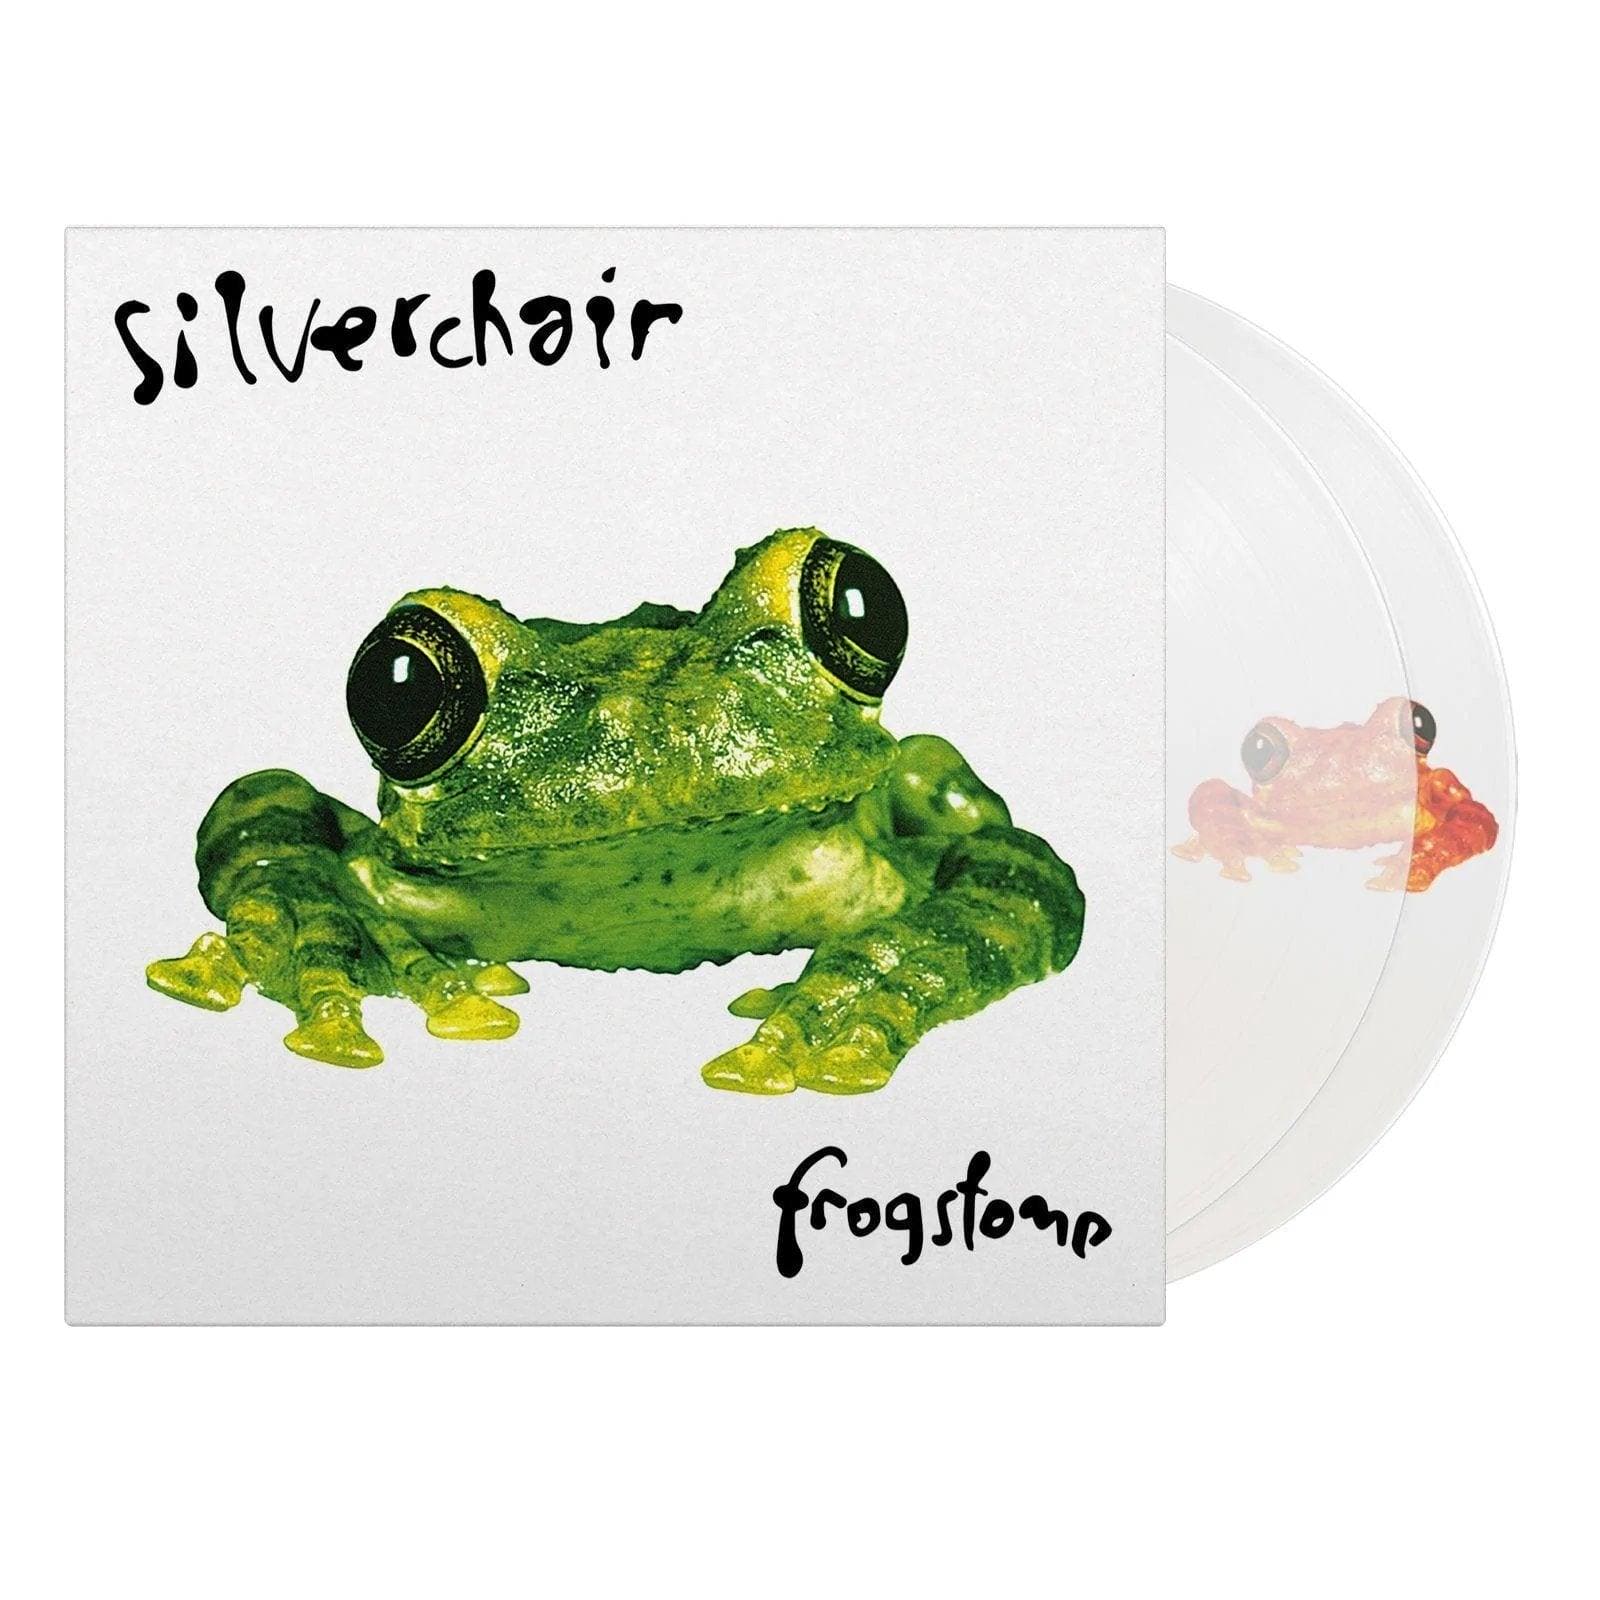 SILVERCHAIR - Frogstomp Vinyl - JWrayRecords